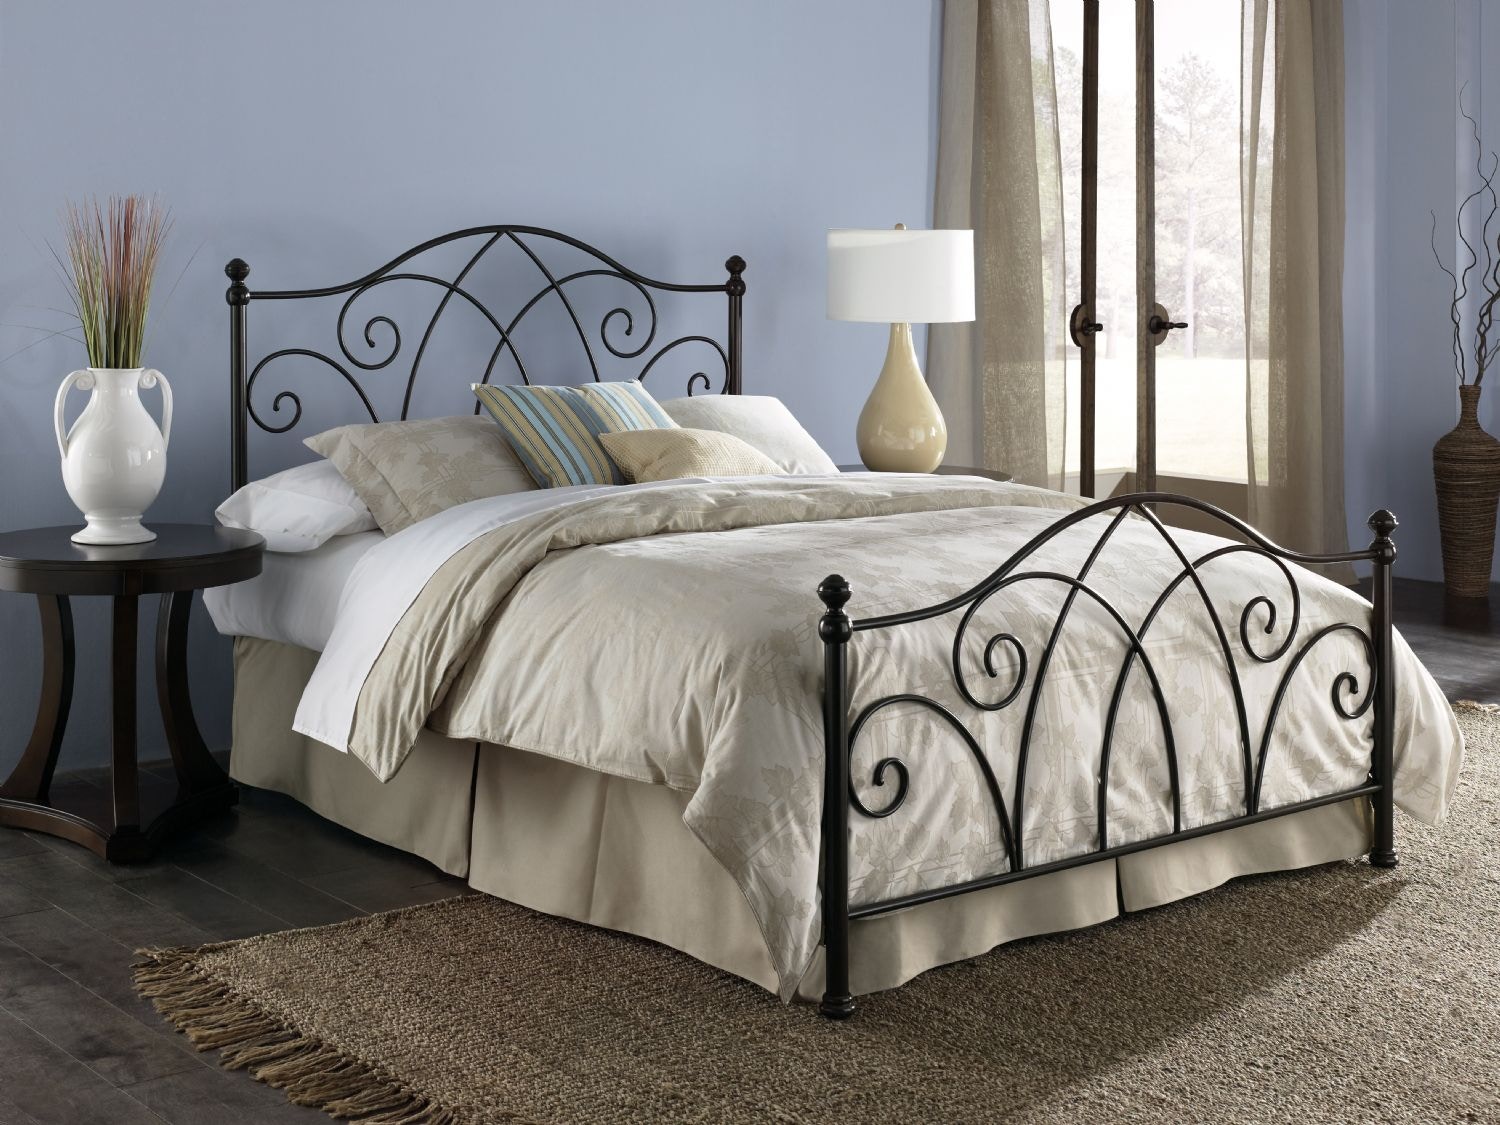 Bedding Support System Home Bedroom Furnitures Rails Mattresses Steel NEW 